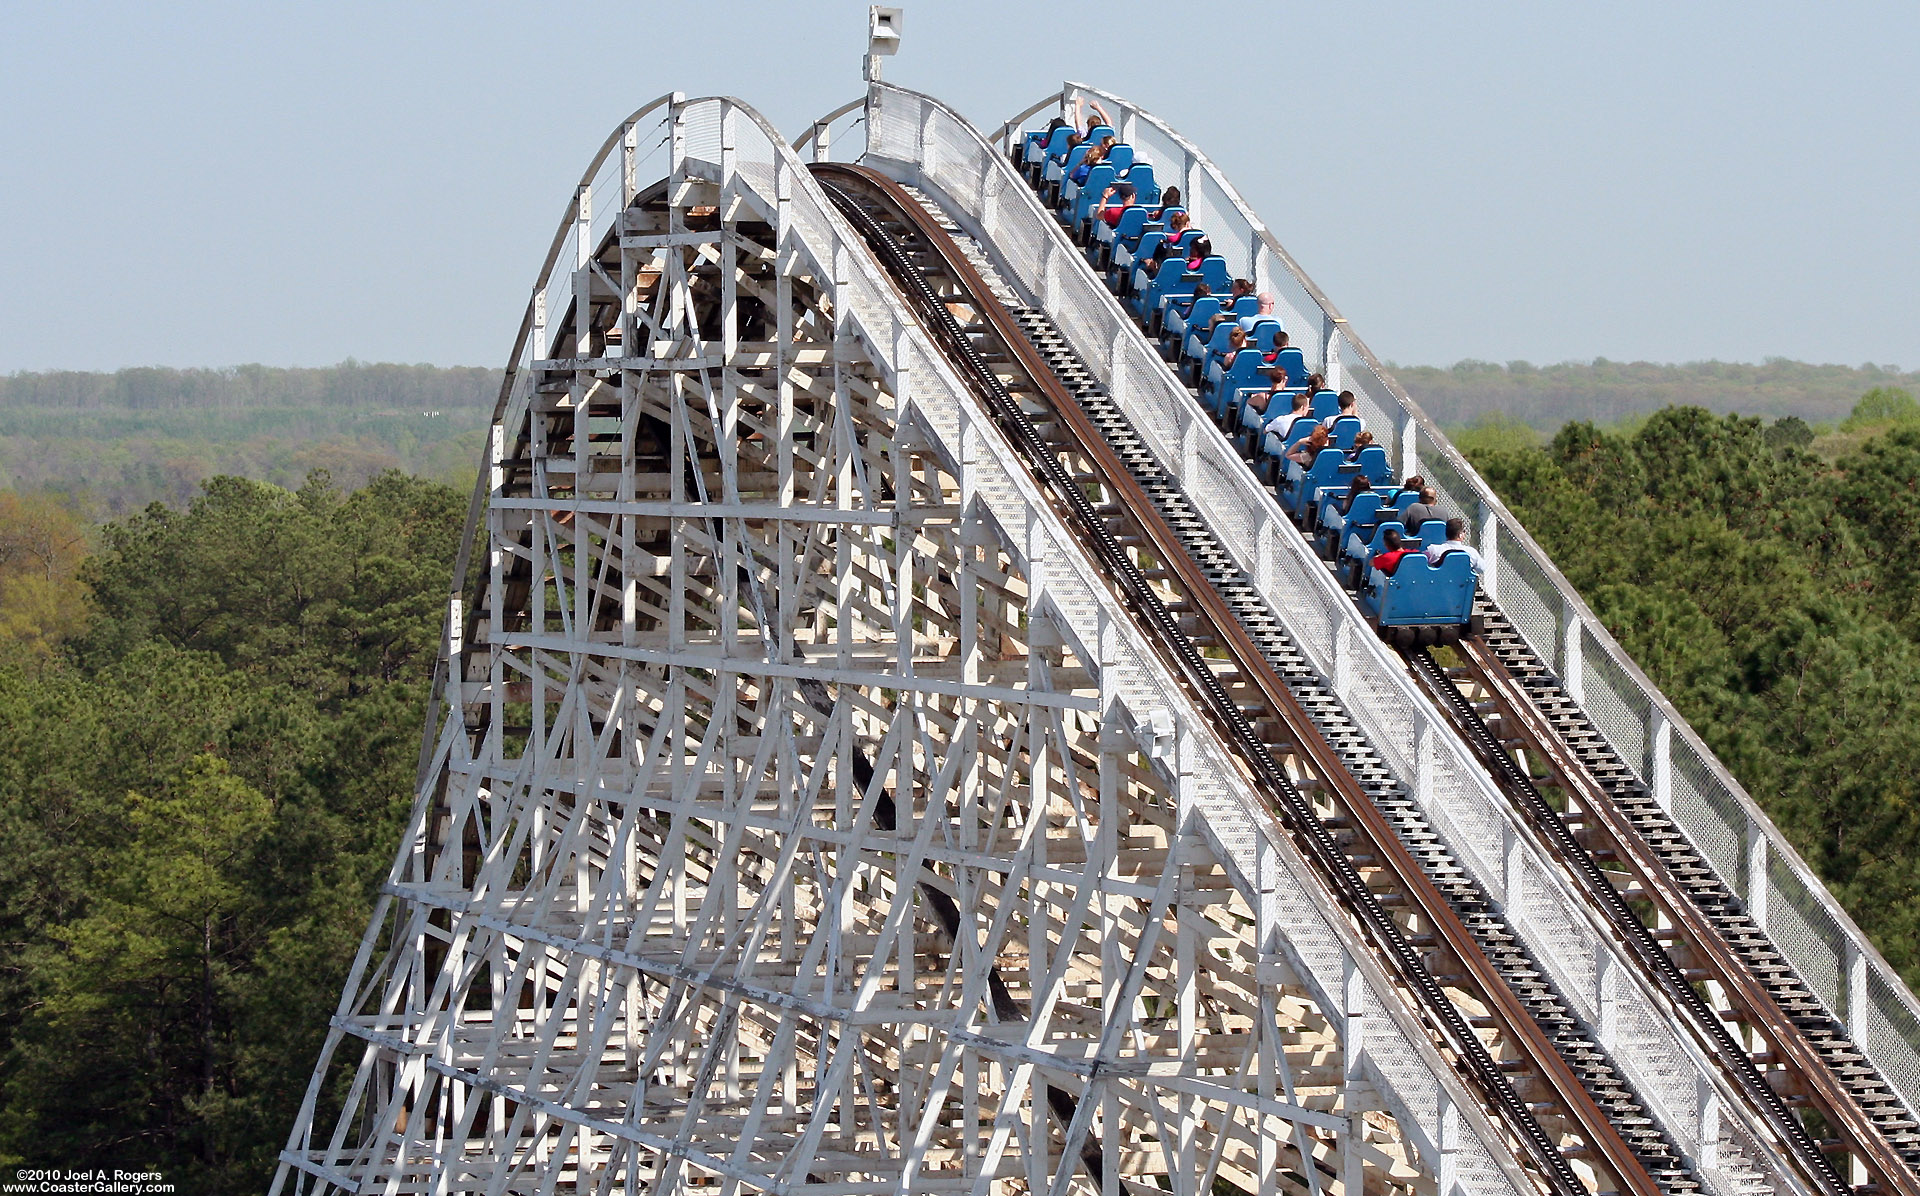 Rebel Yell racing wooden roller coaster